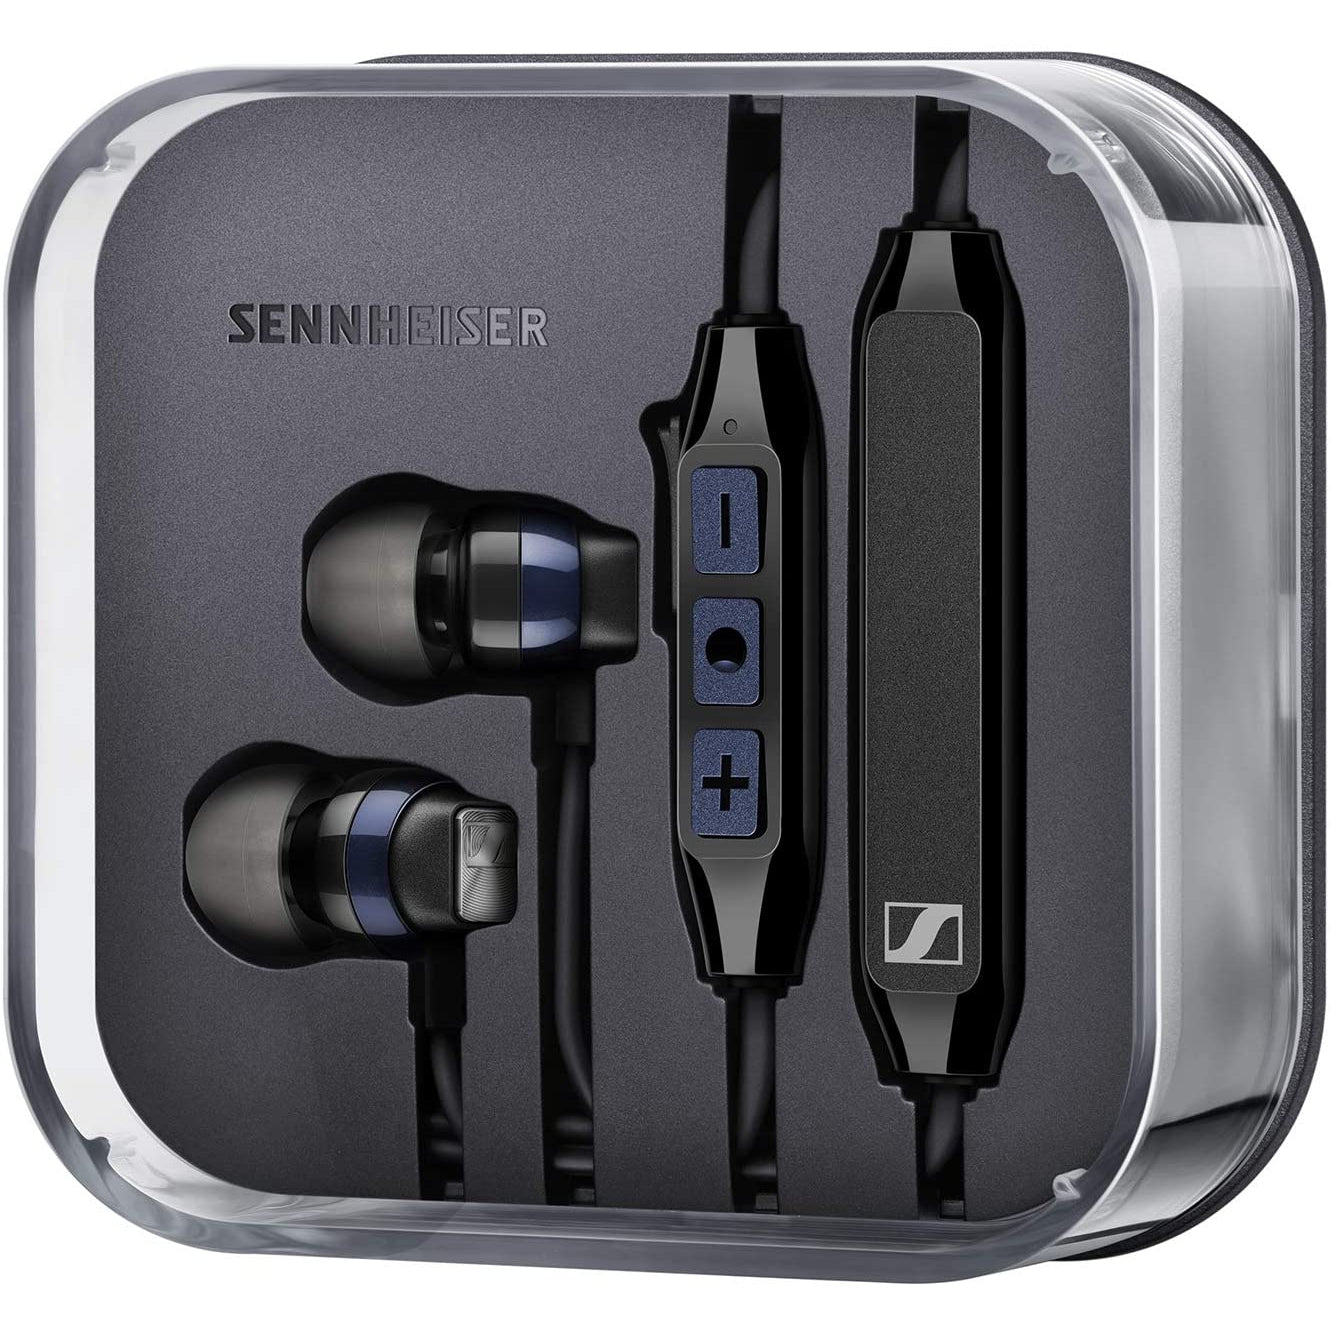 Sennheiser CX 6.00BT In-Ear Wireless Headphones - Black